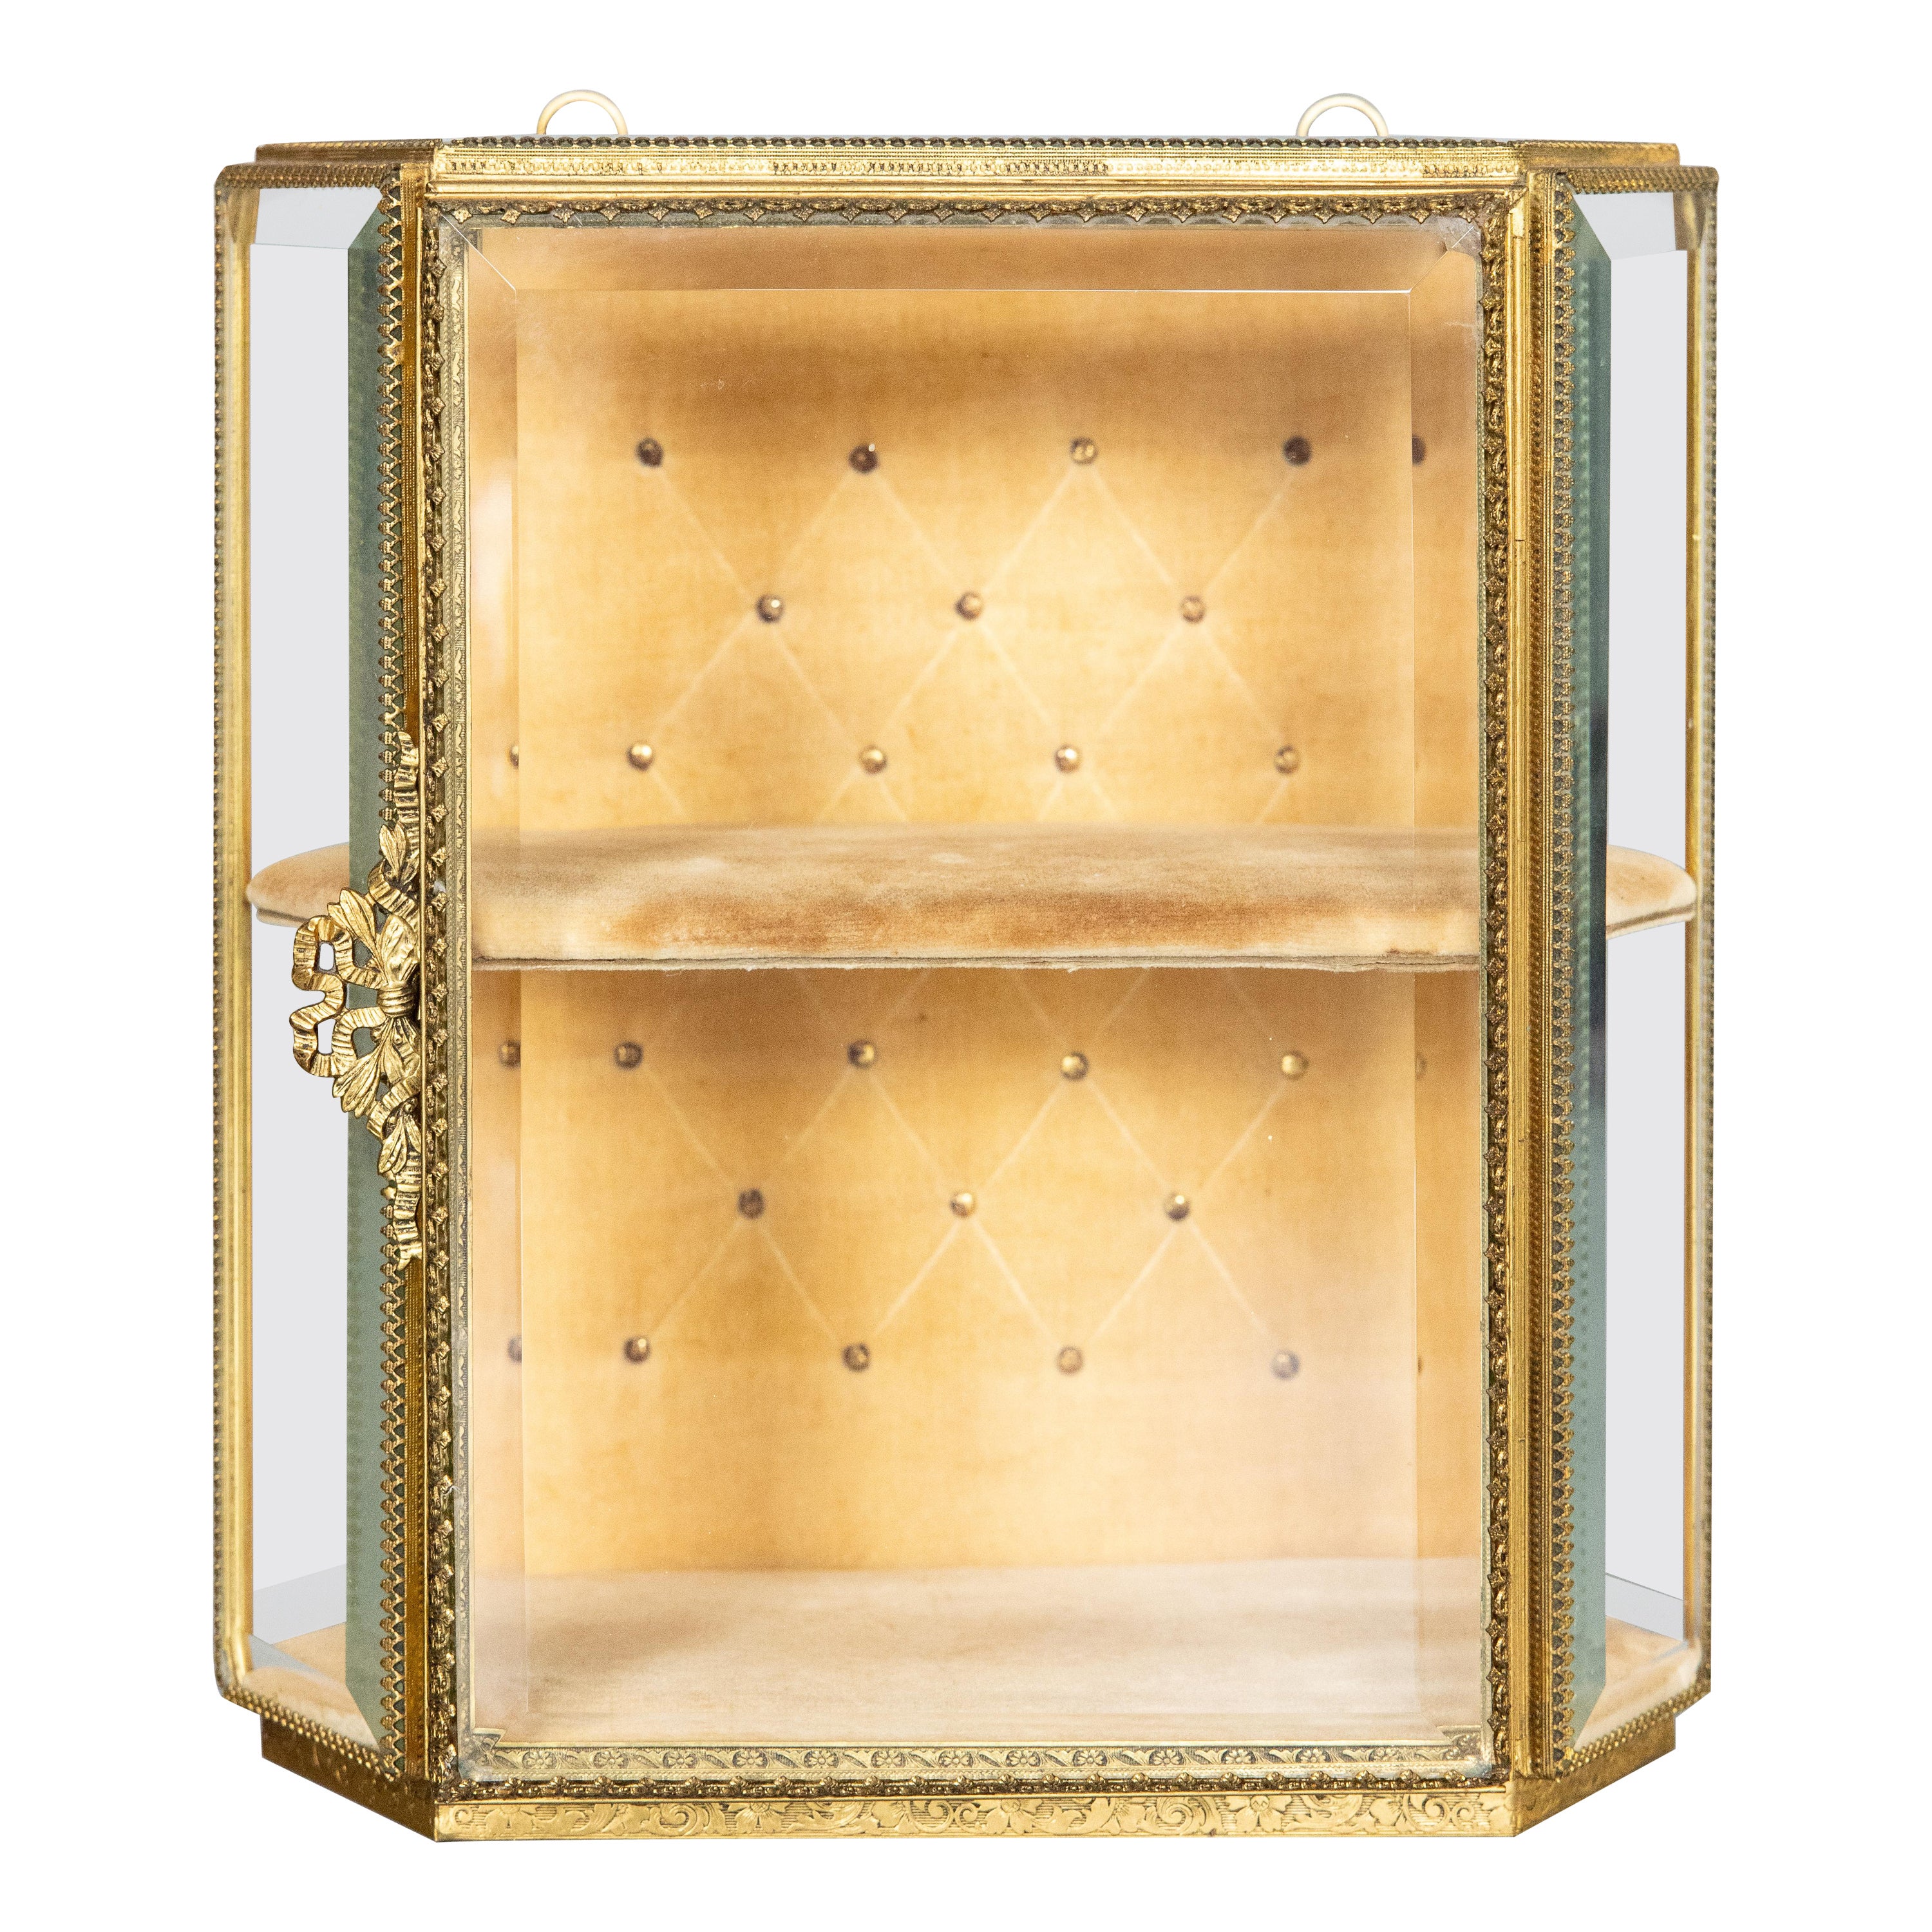 Large French Ormolu & Glass Hanging Wall Jewelry Casket Box, circa 1900